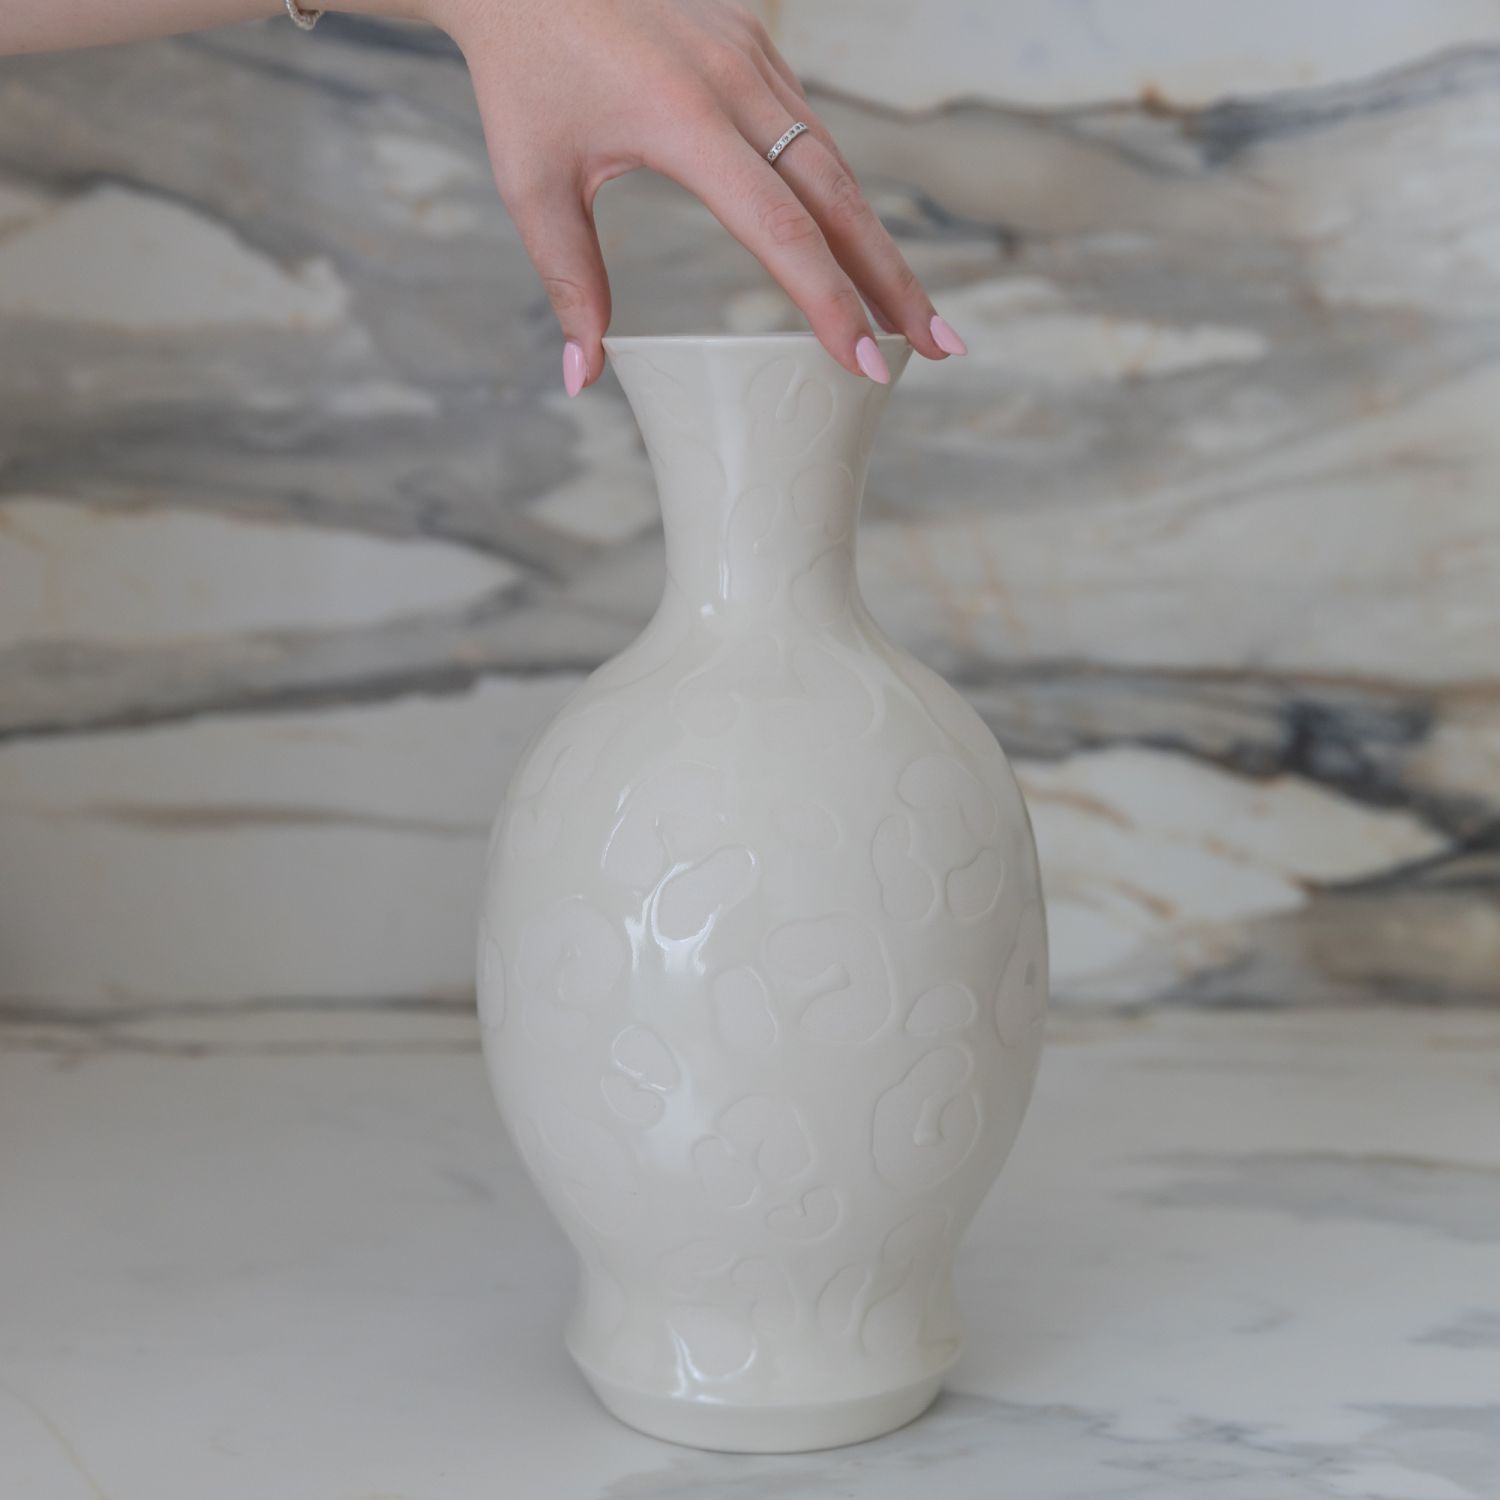 Mima Ceramics: White Print Vessel no. 3 Product Image 3 of 3